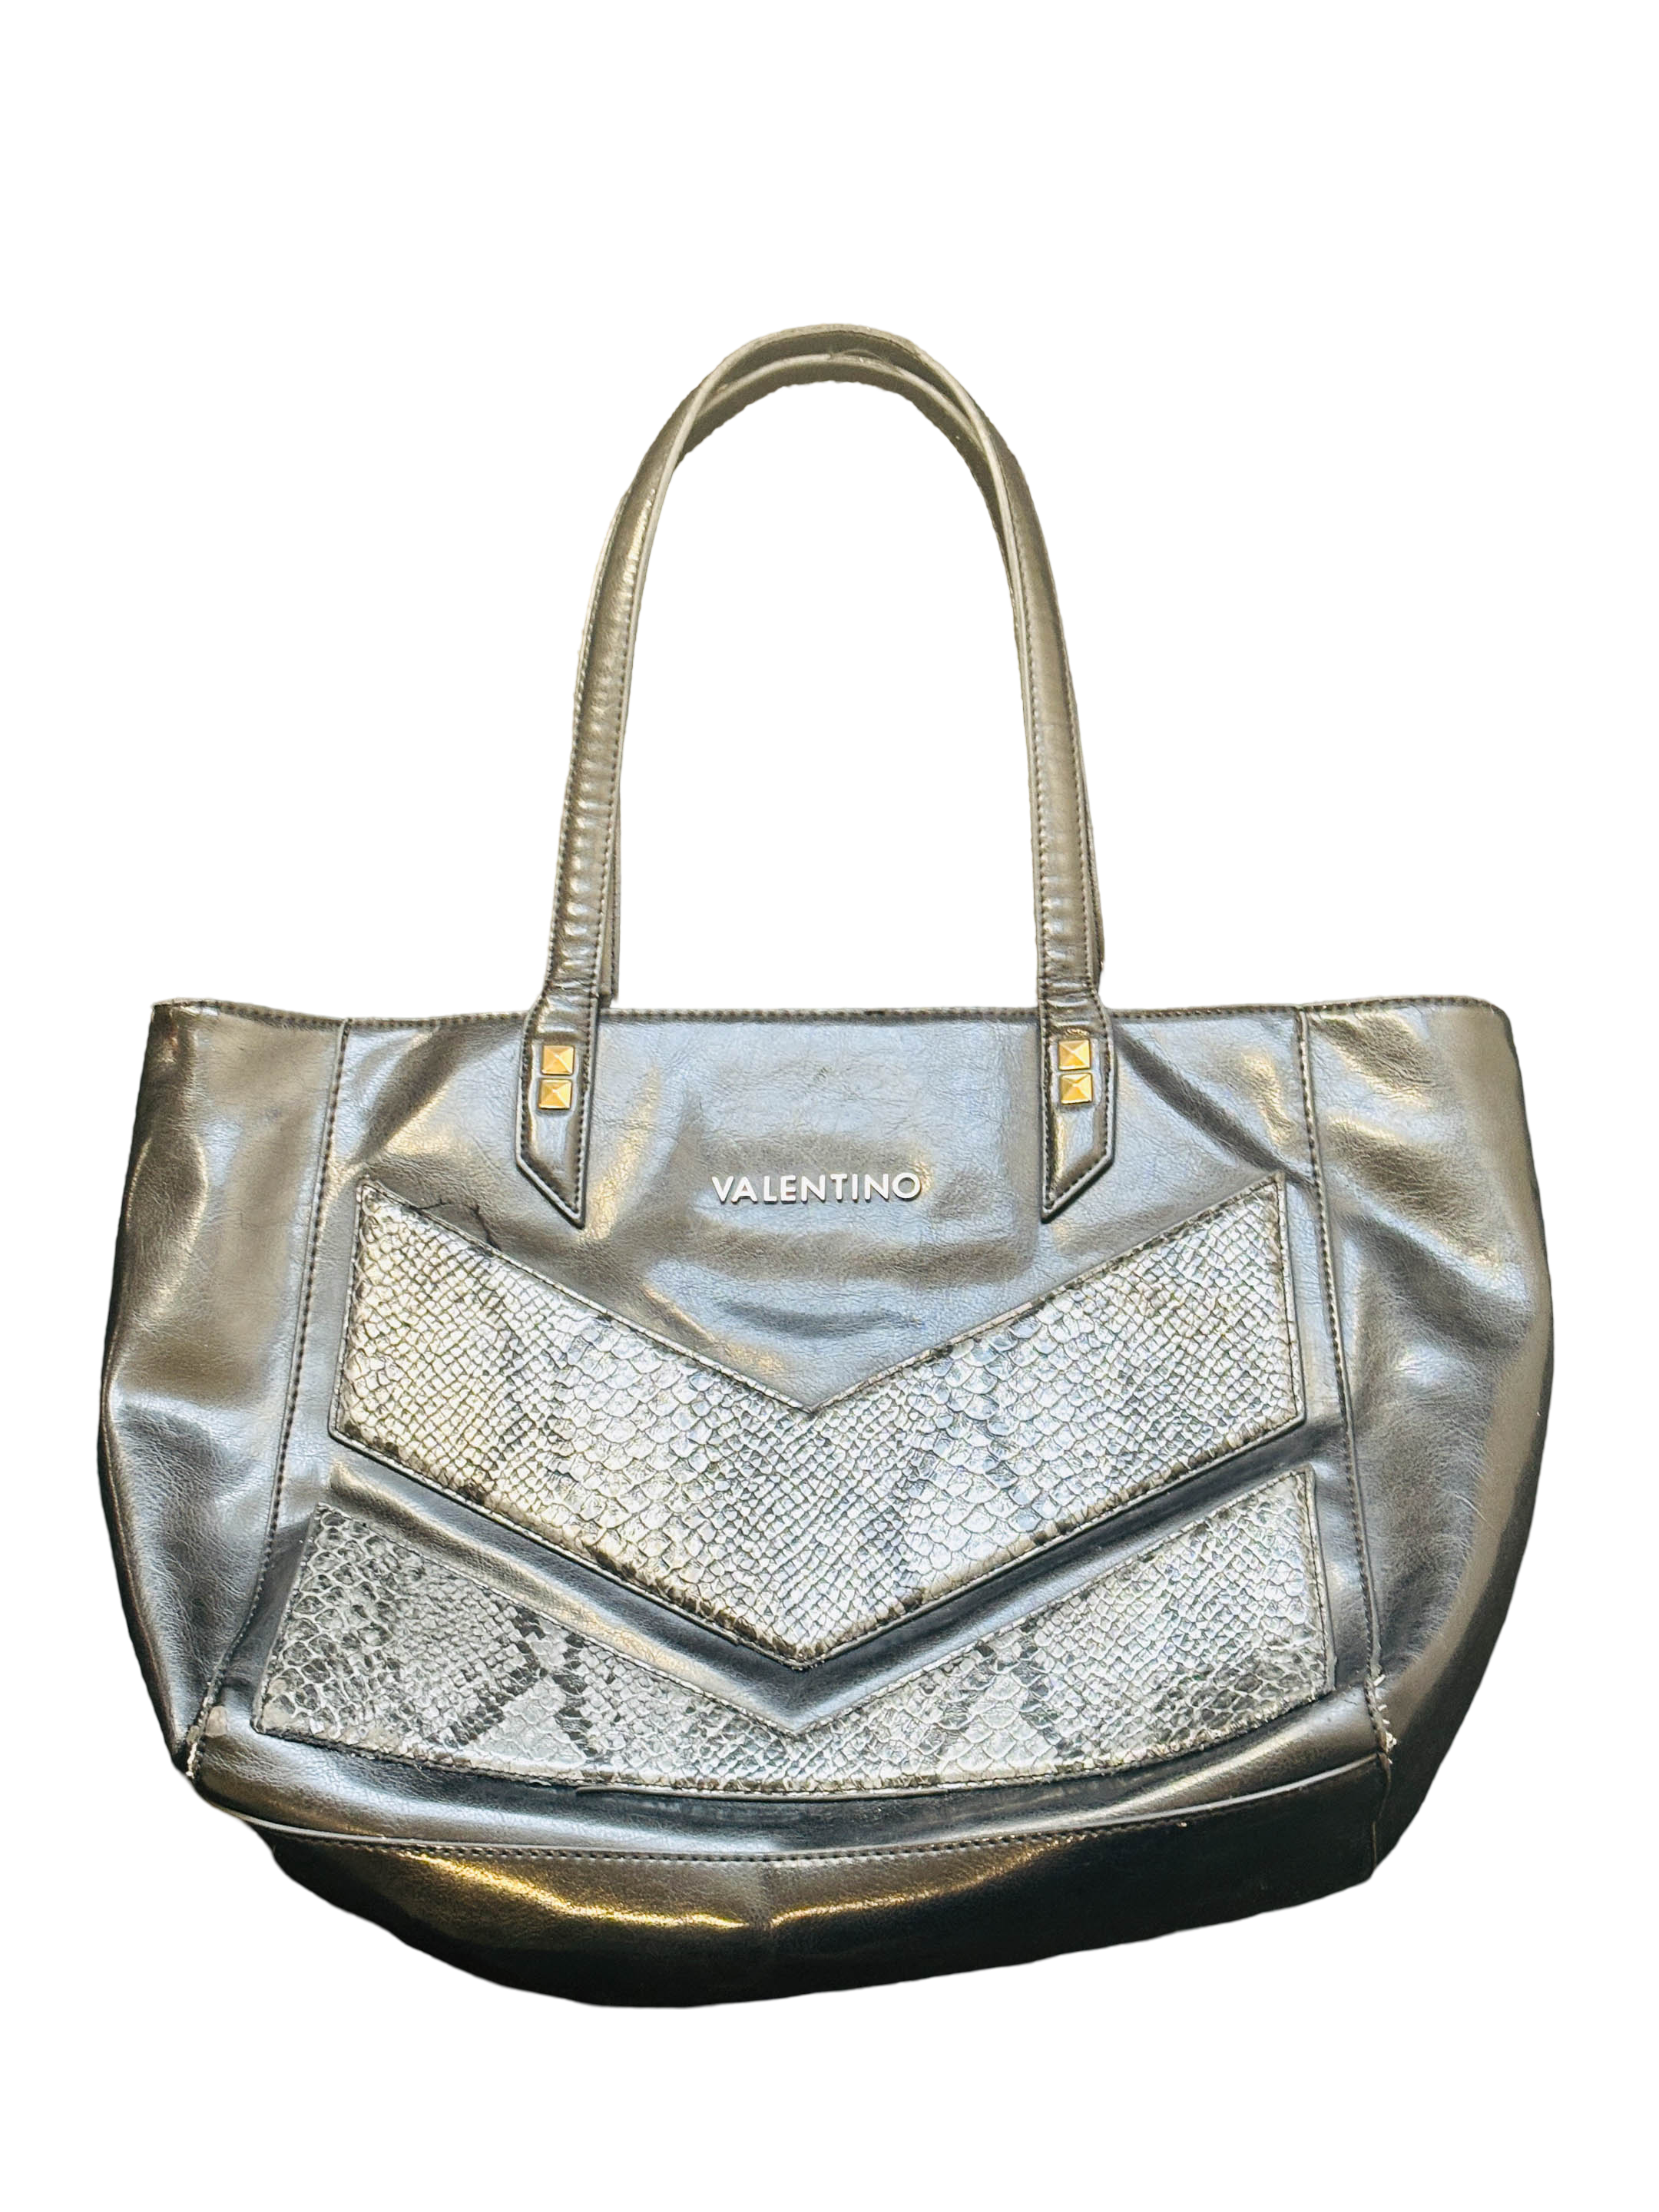 90s Stunning vintage Valentino silver tote Handbag SKU 4074.